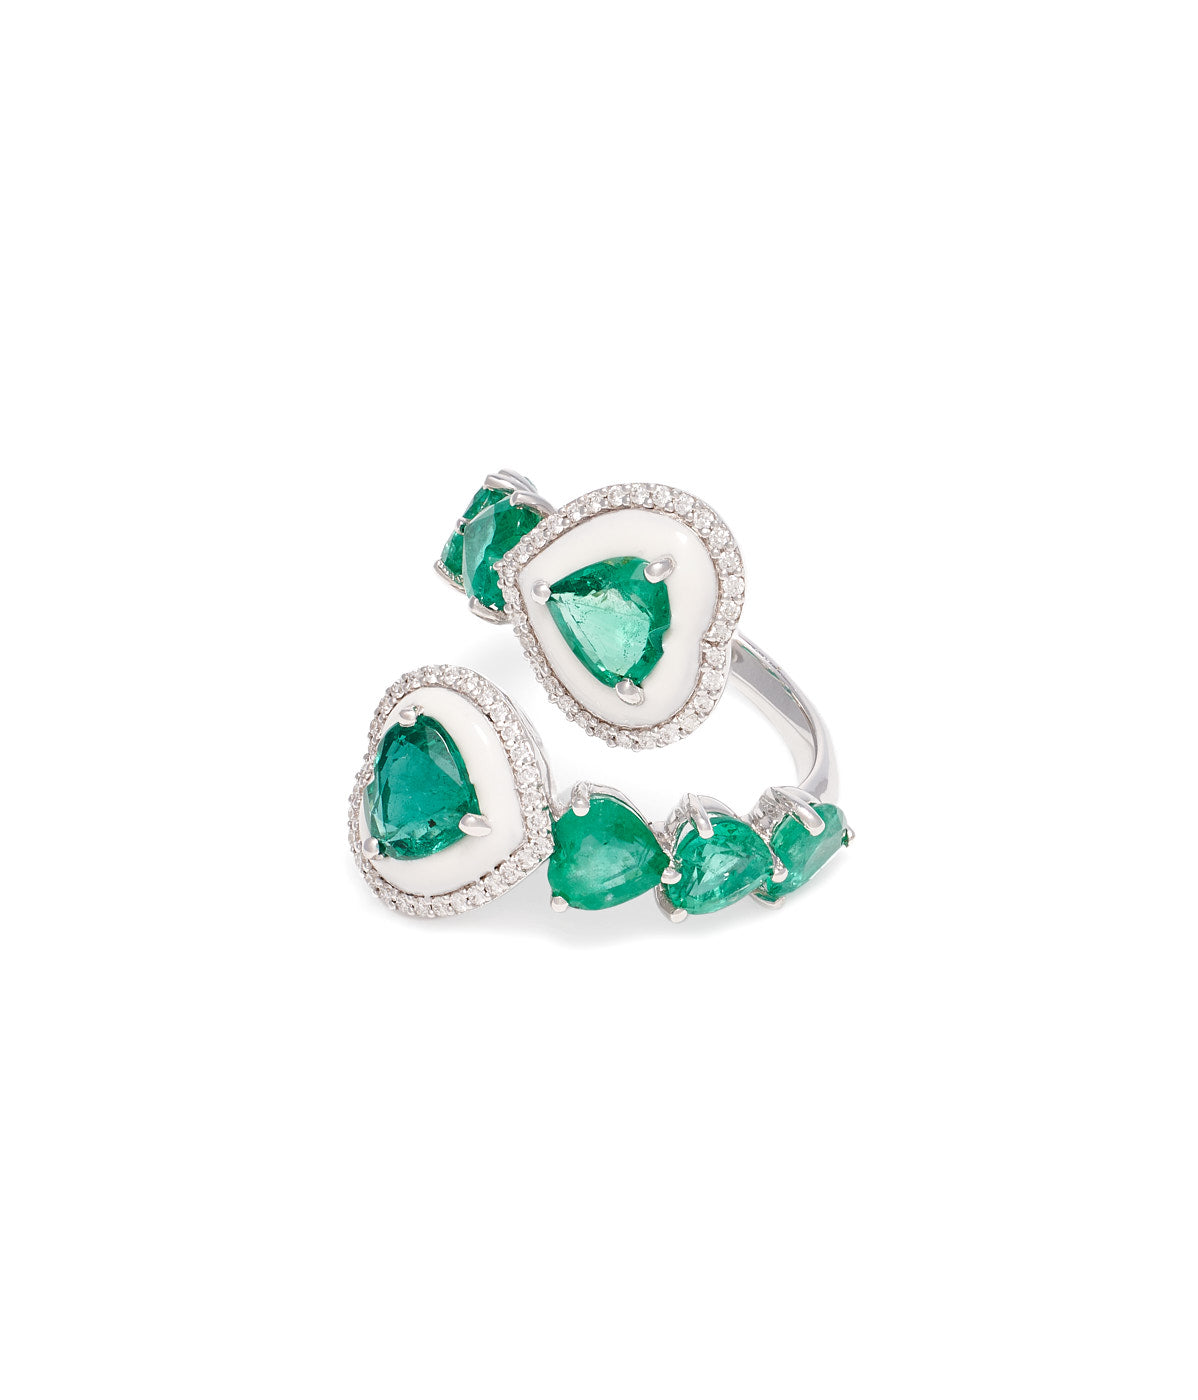 Emerald heart wrap 18k white gold ring